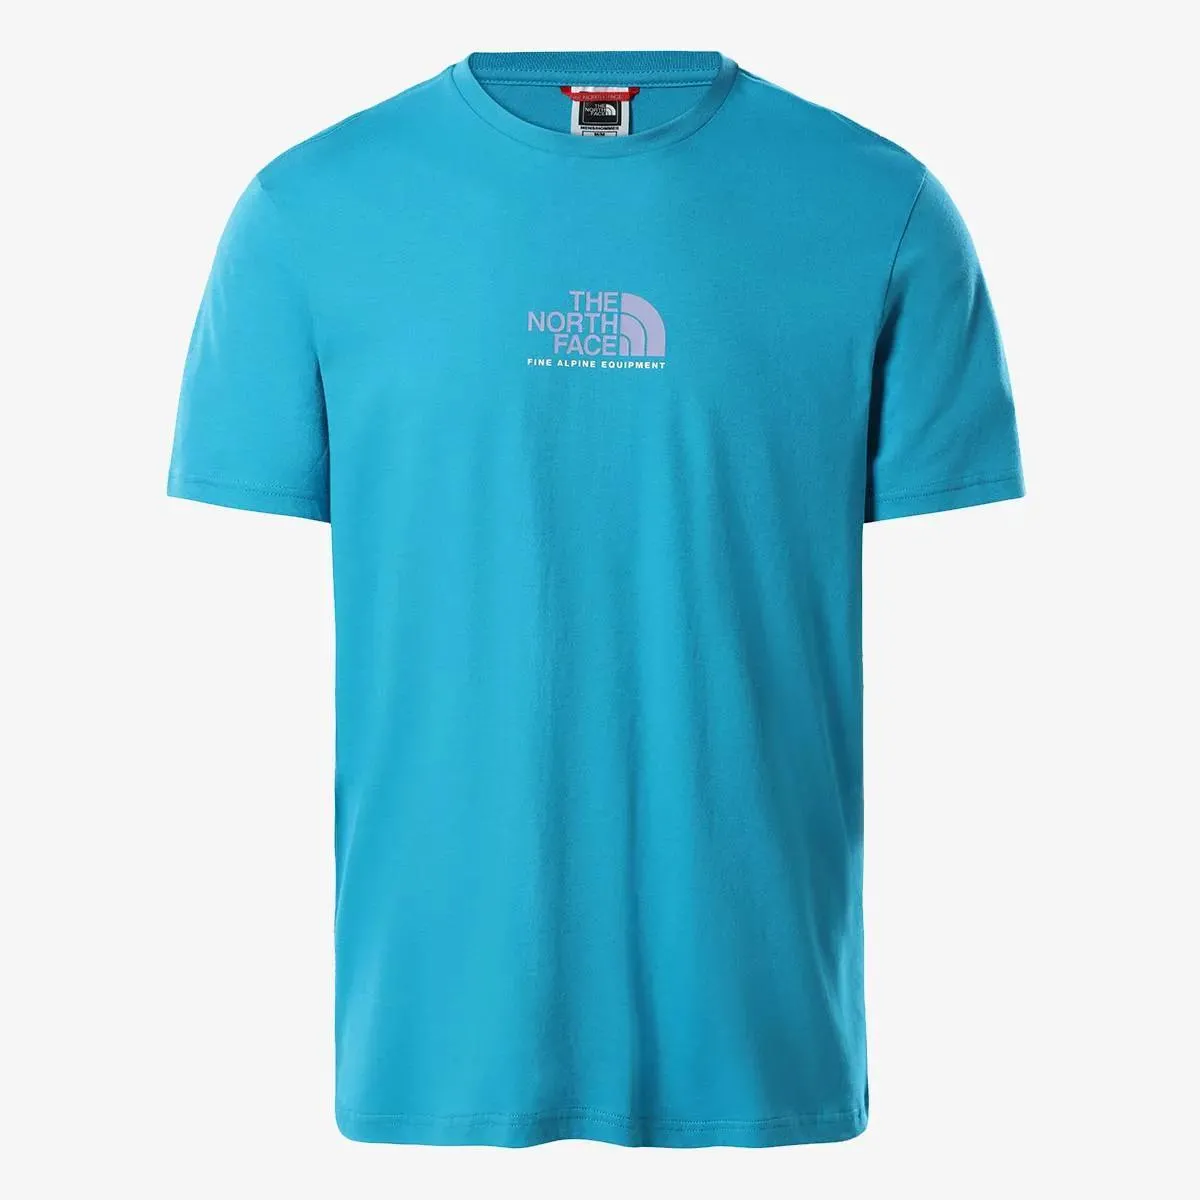 The North Face T-shirt M S/S FINE ALPINE EQUIPMENT TEE 3 - EU 